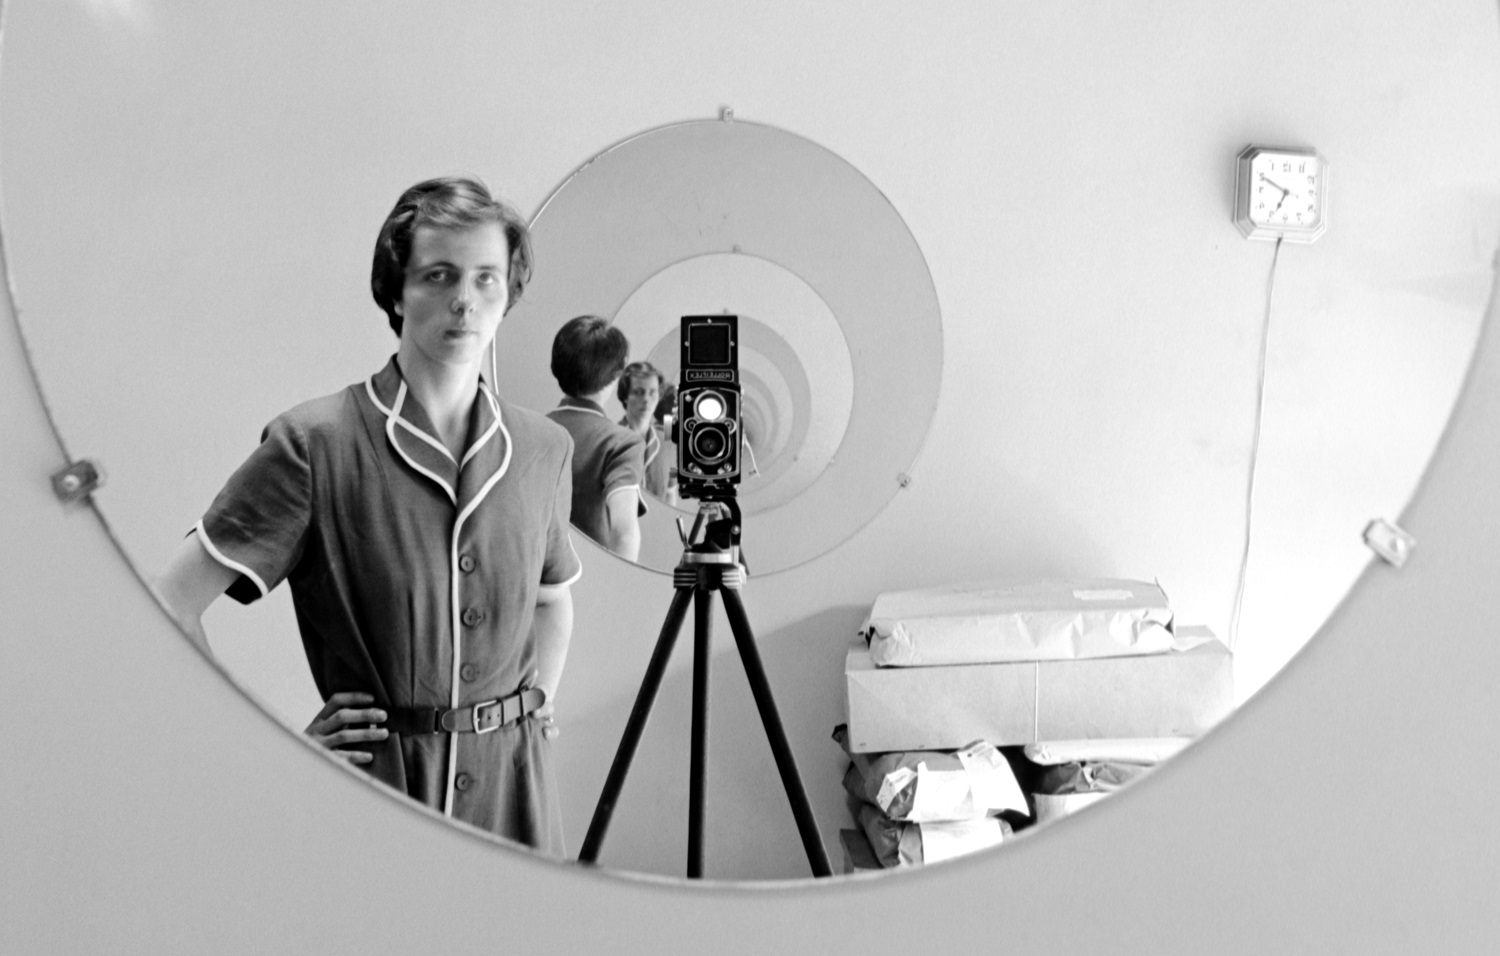 Vivian Maier, Self Portrait, May 5th, 1955. Vivian Maier/Maloof Collection